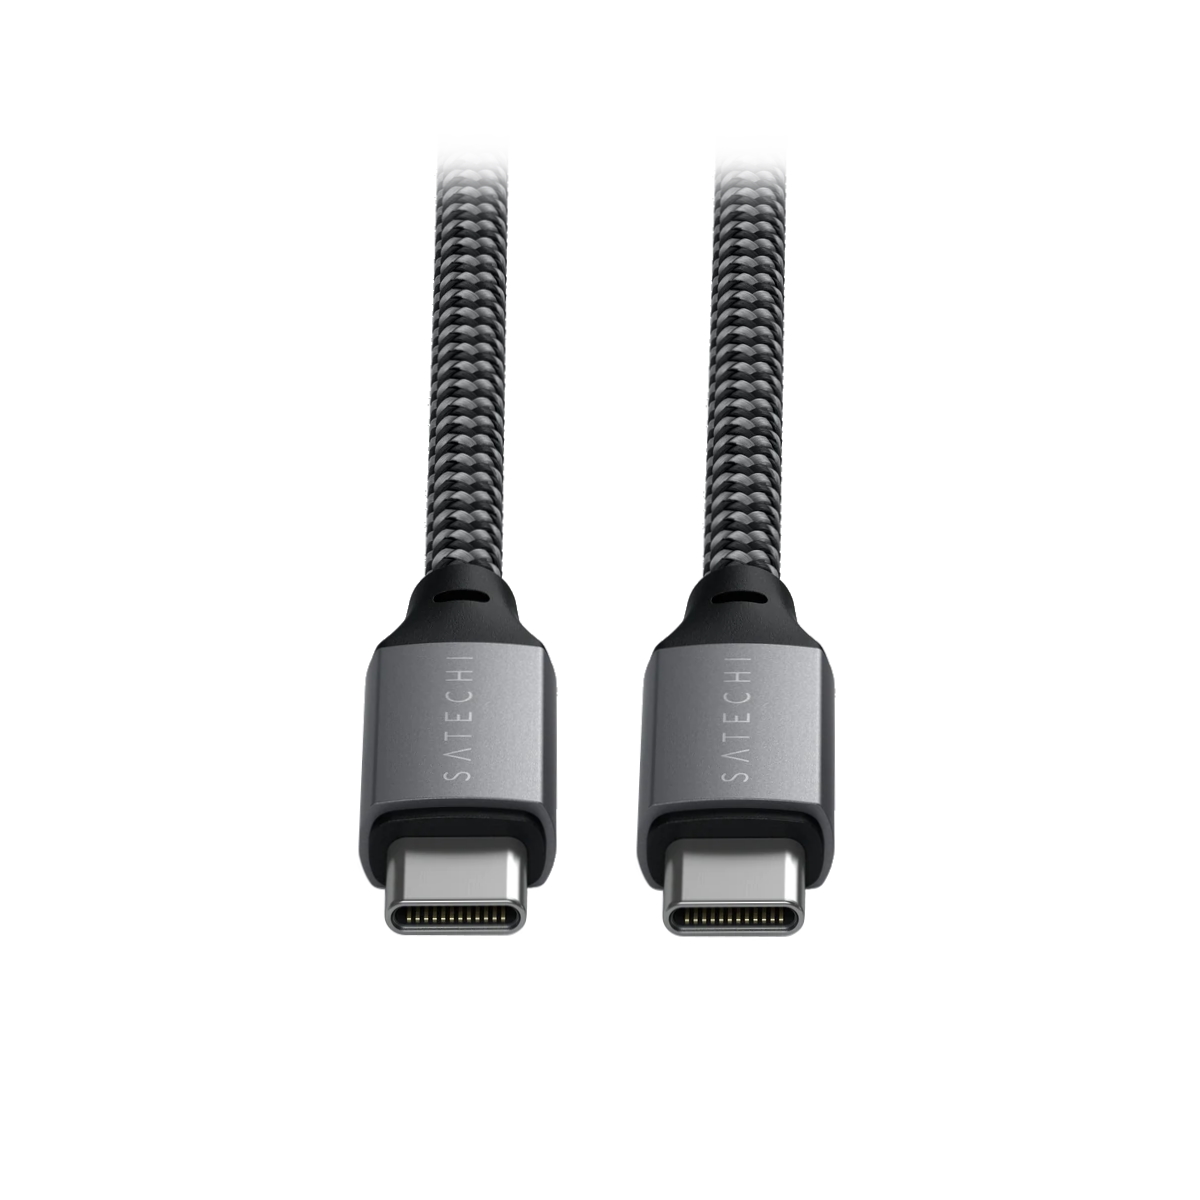 Cable USB C a USB C 2m Carga Rapida 100W Satechi